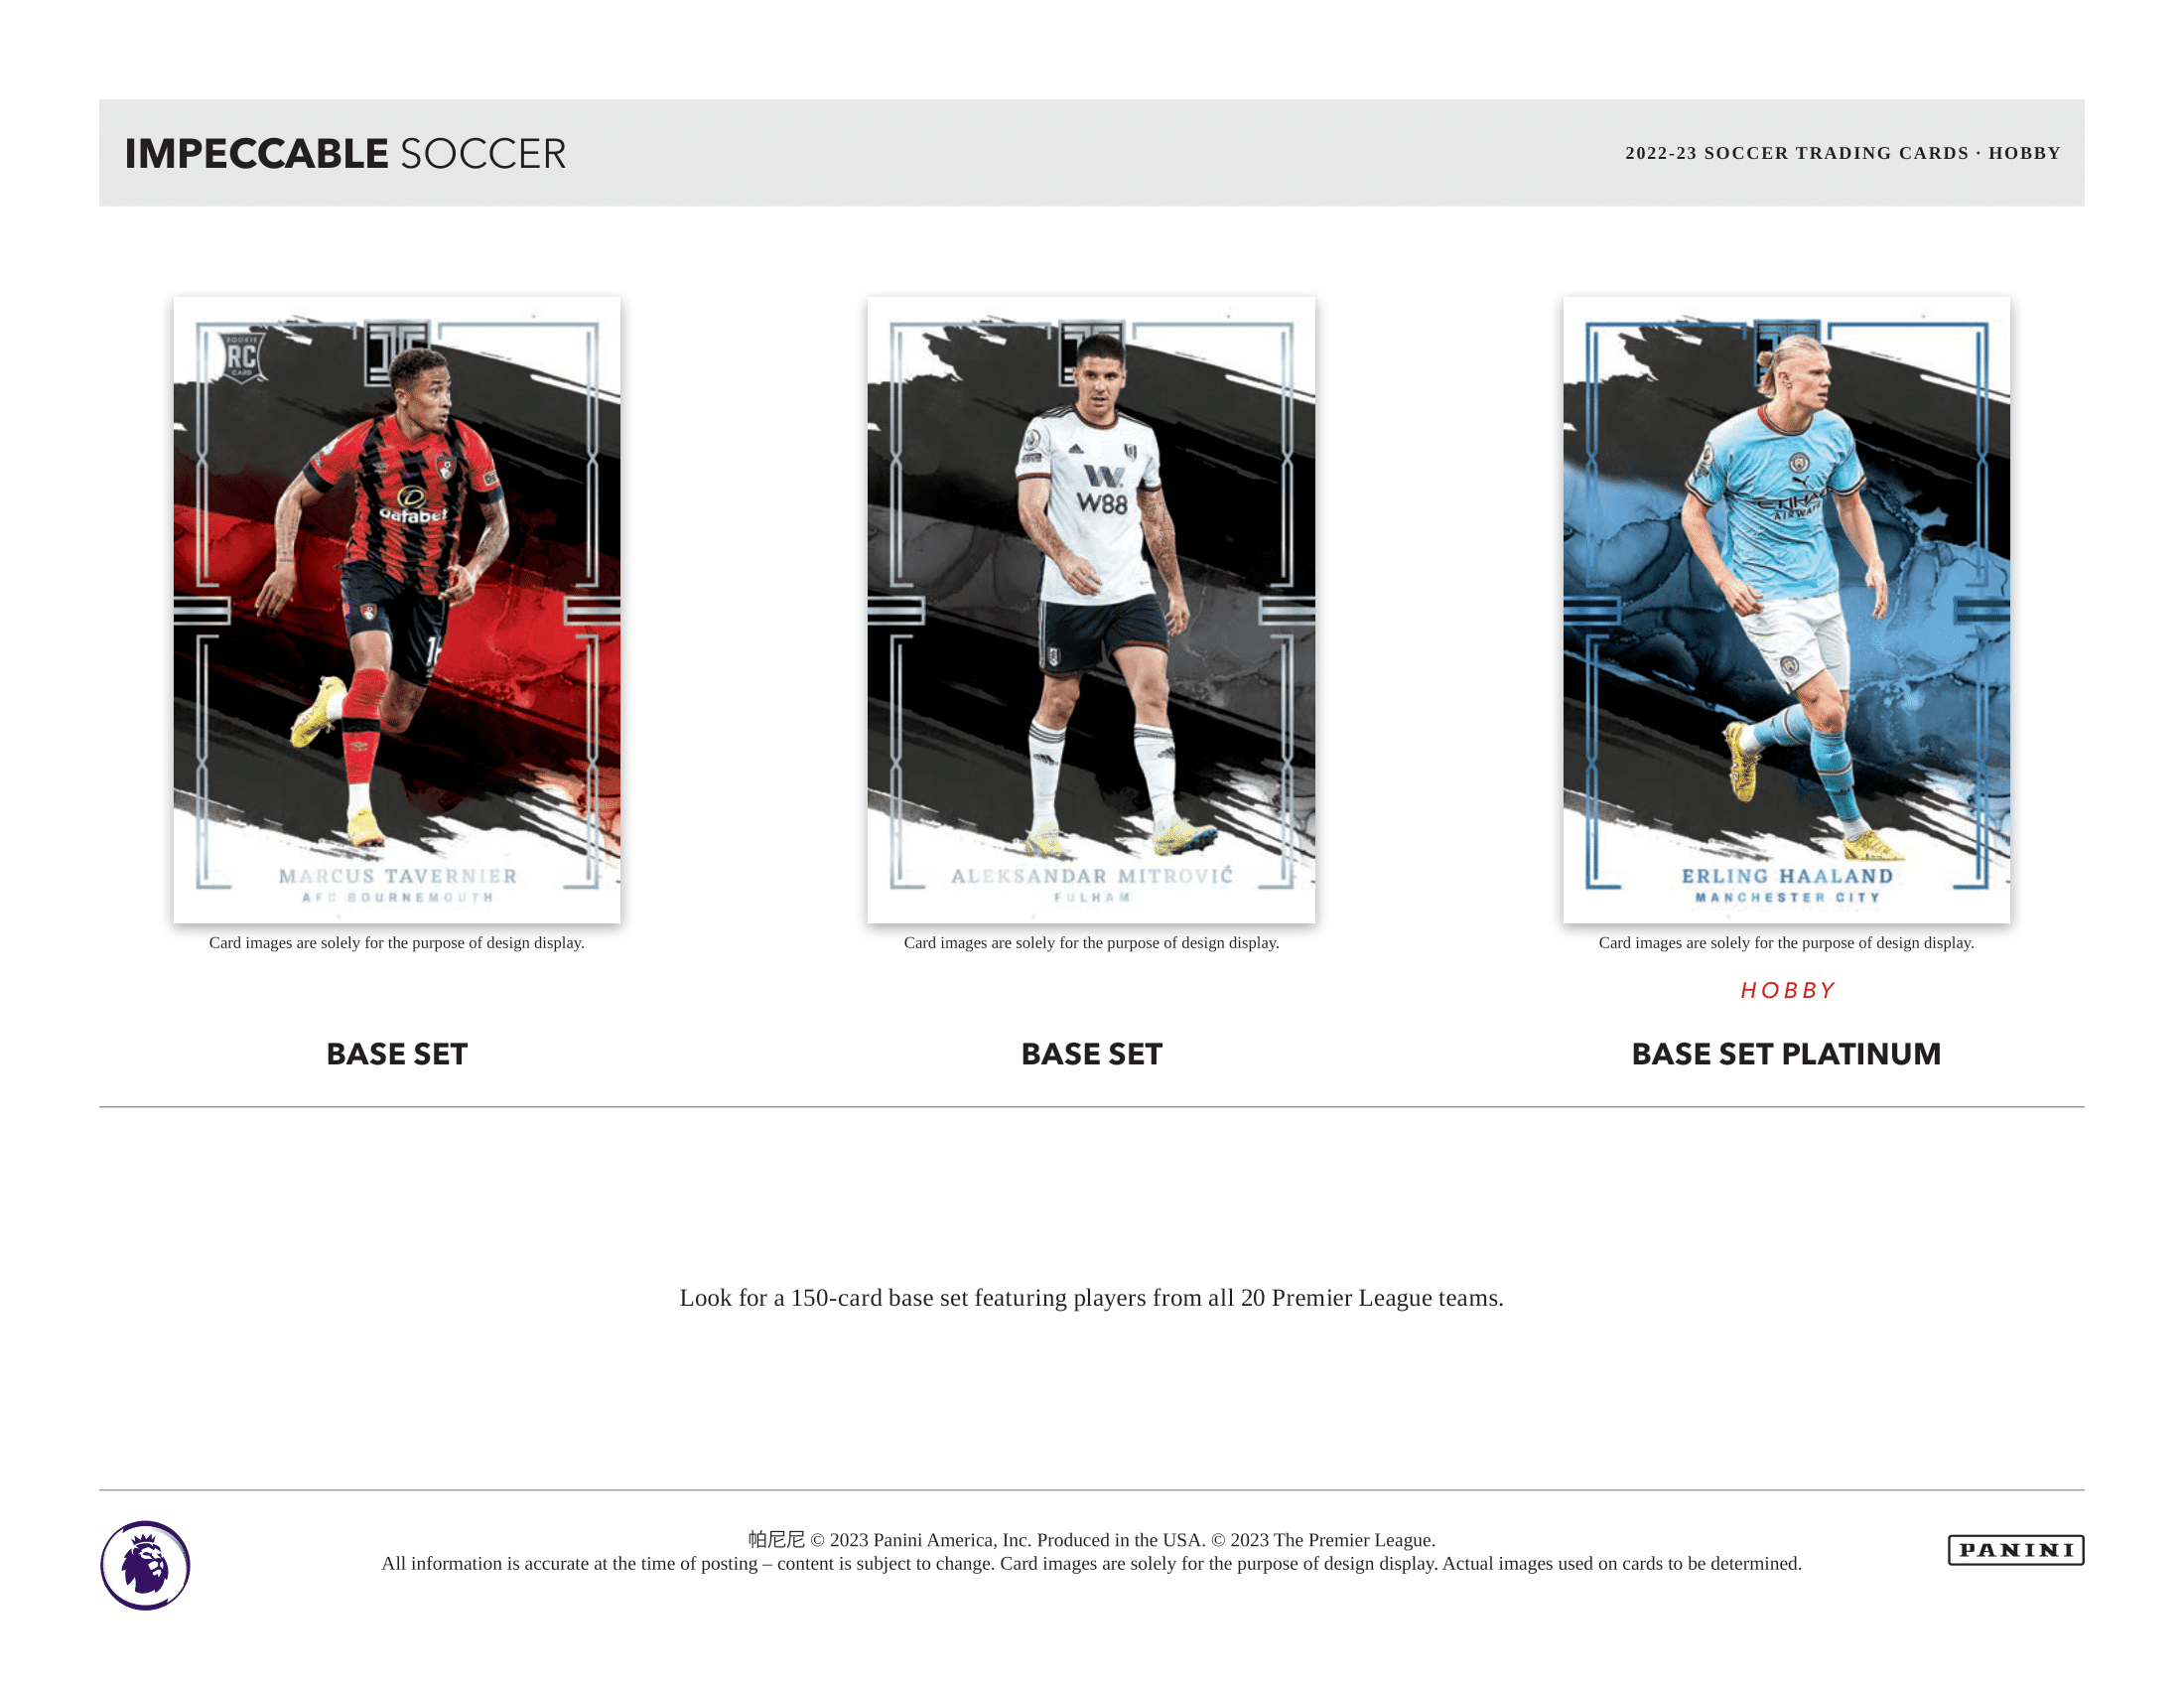 Panini - 2022/23 Impeccable Football (Soccer) - Hobby Box - The Card Vault